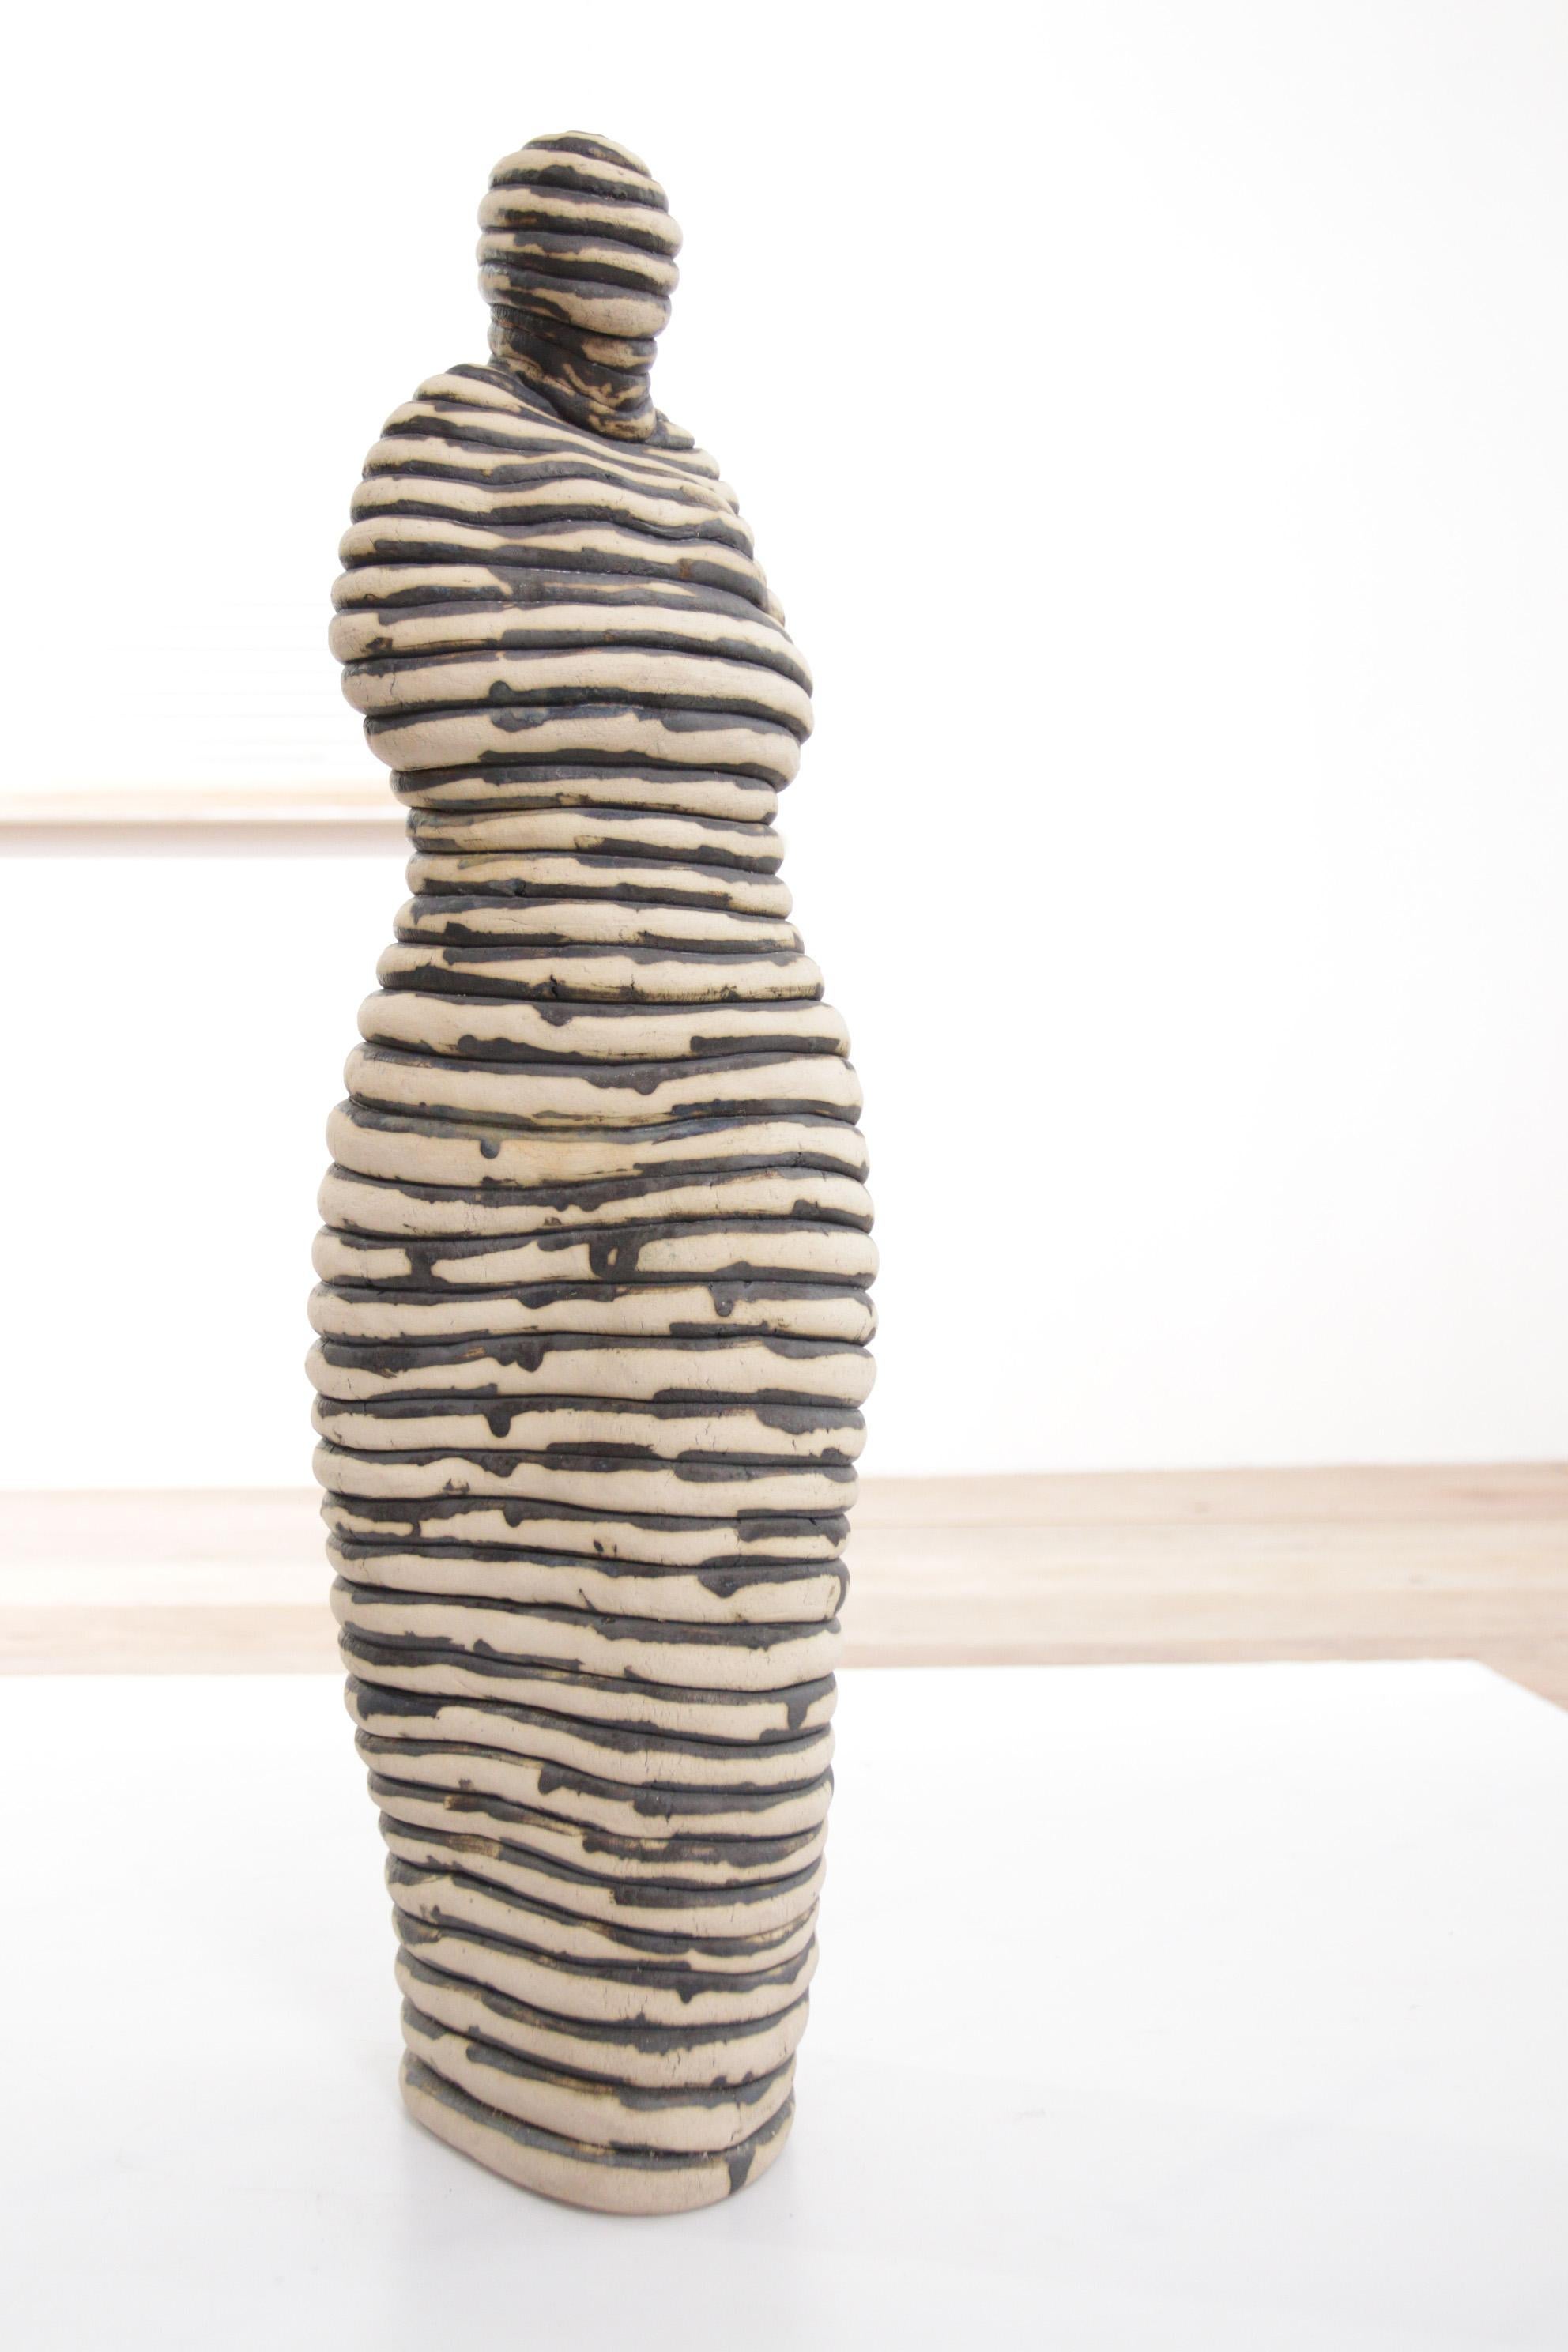 Modern Andrea Dogterom Ceramic Sculpture Women in Stripes